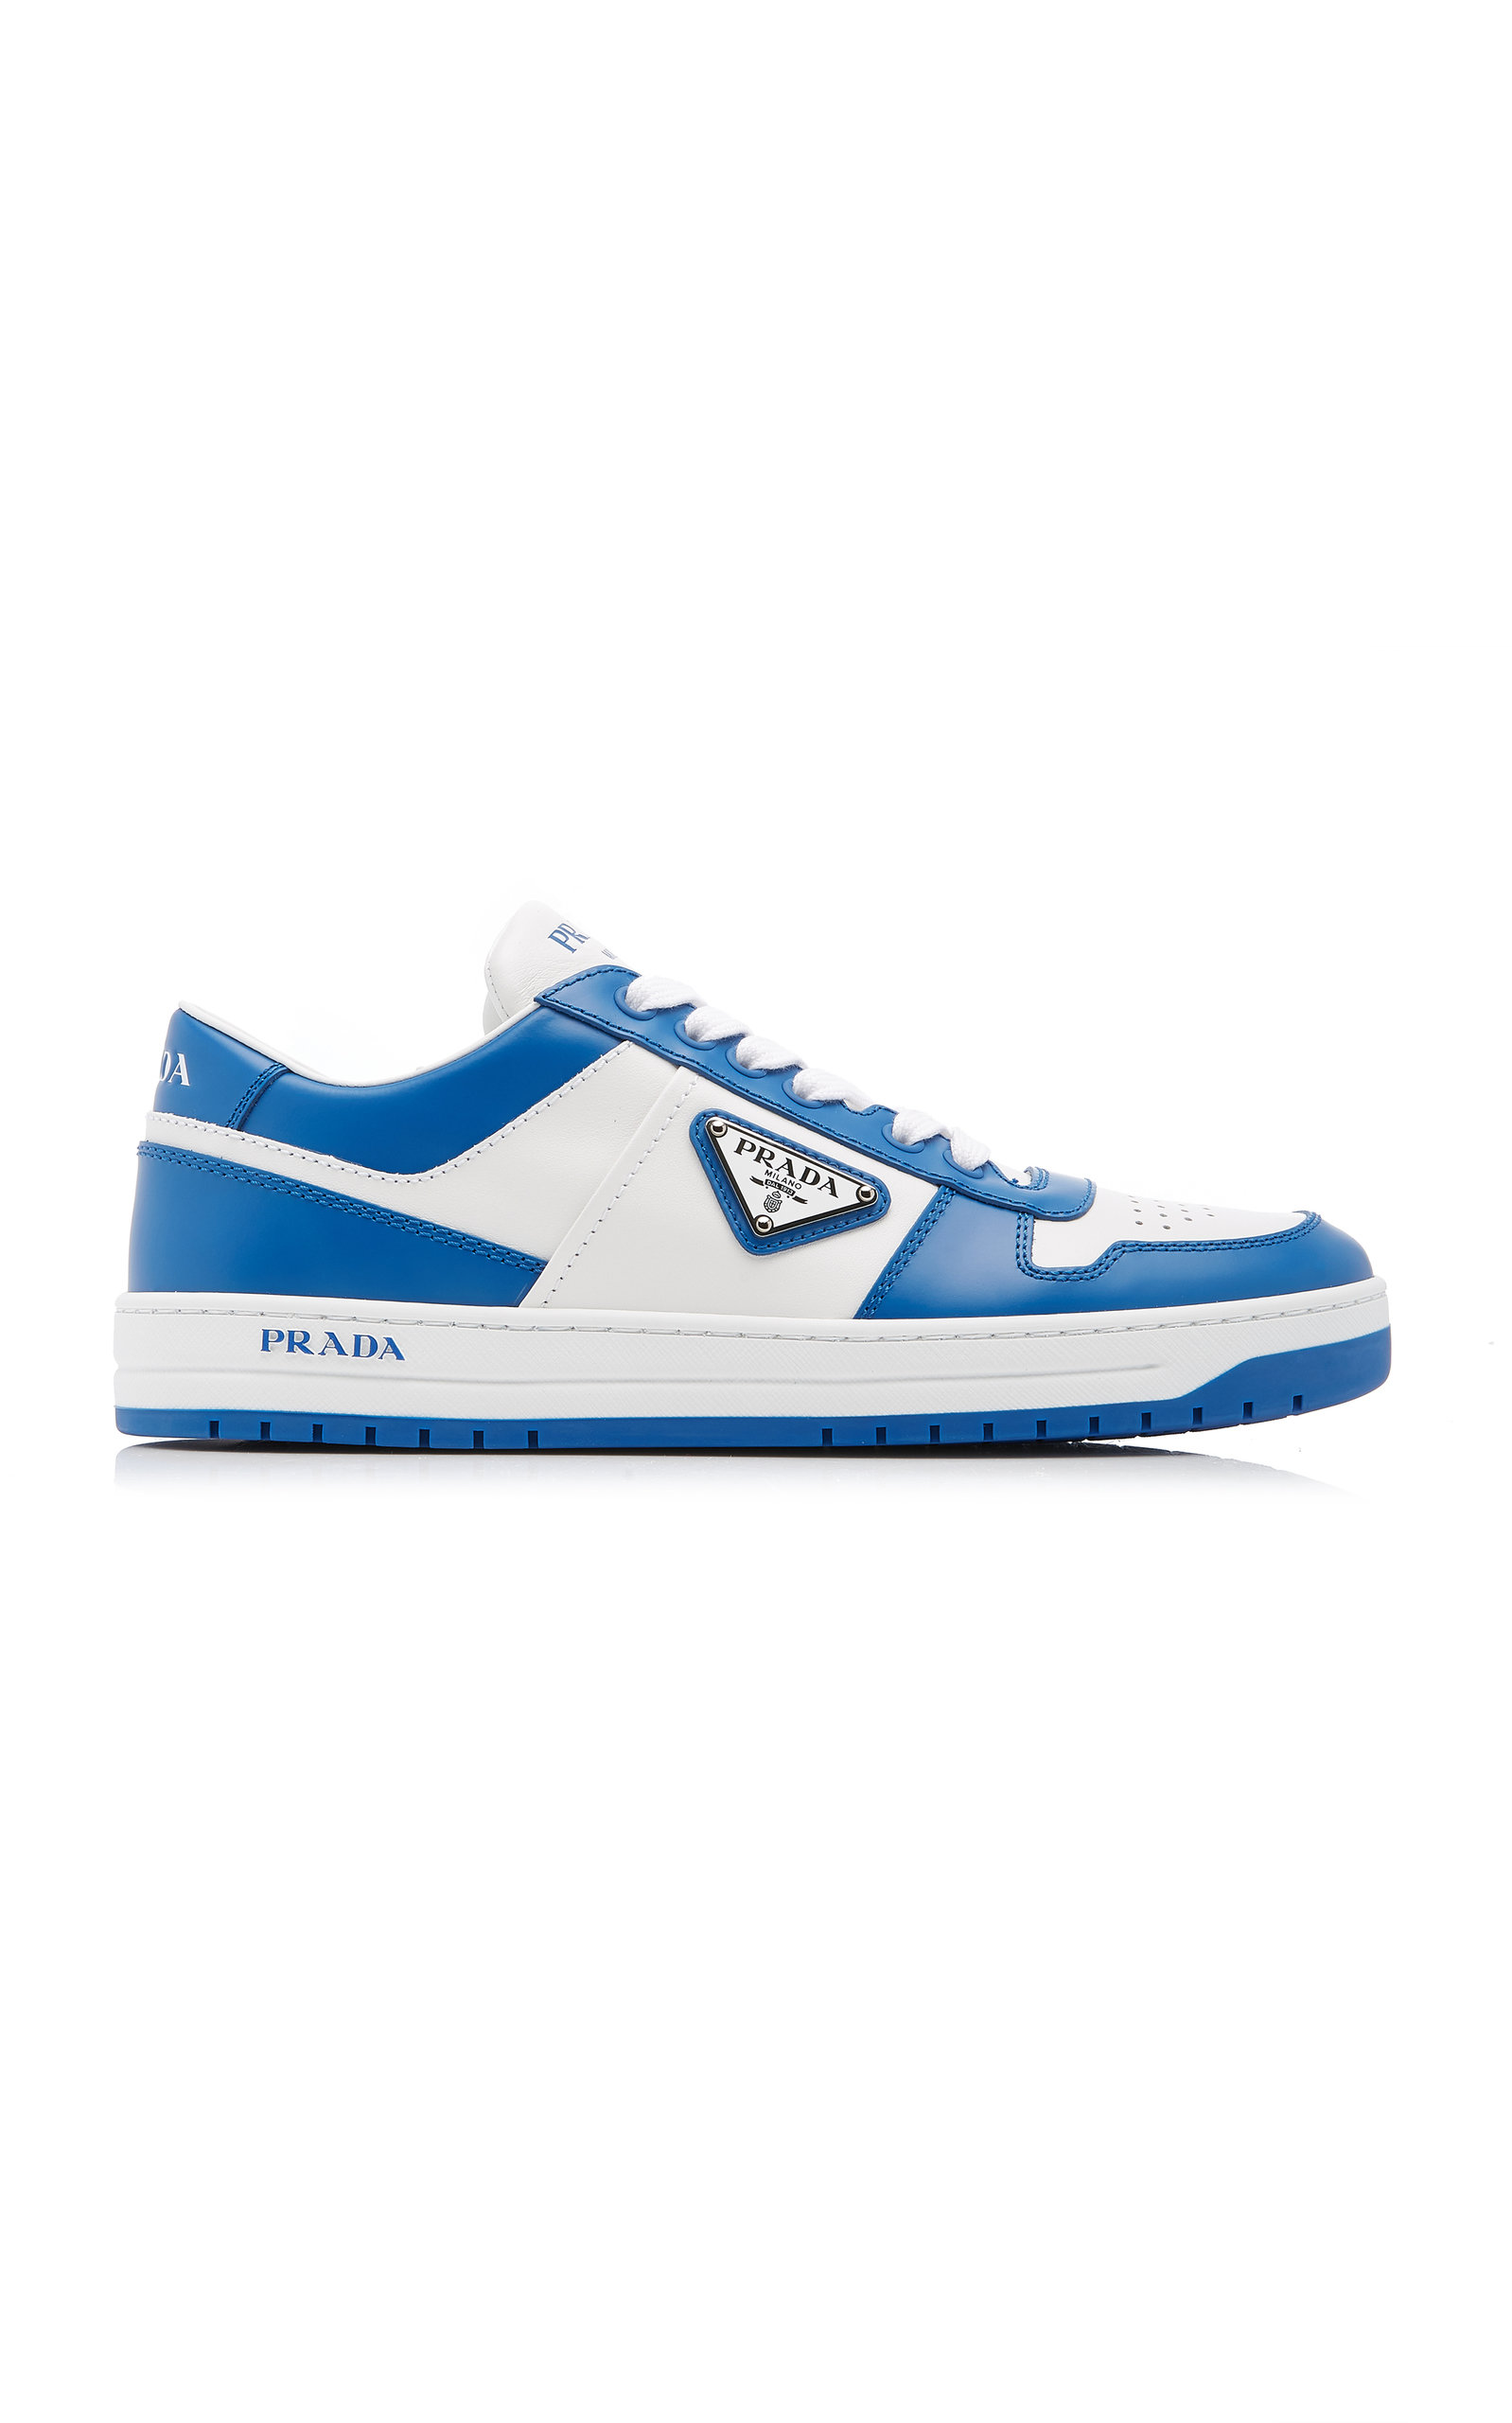 Prada - Women's Cassetta Leather Sneakers - Blue - IT 36 - Moda Operandi